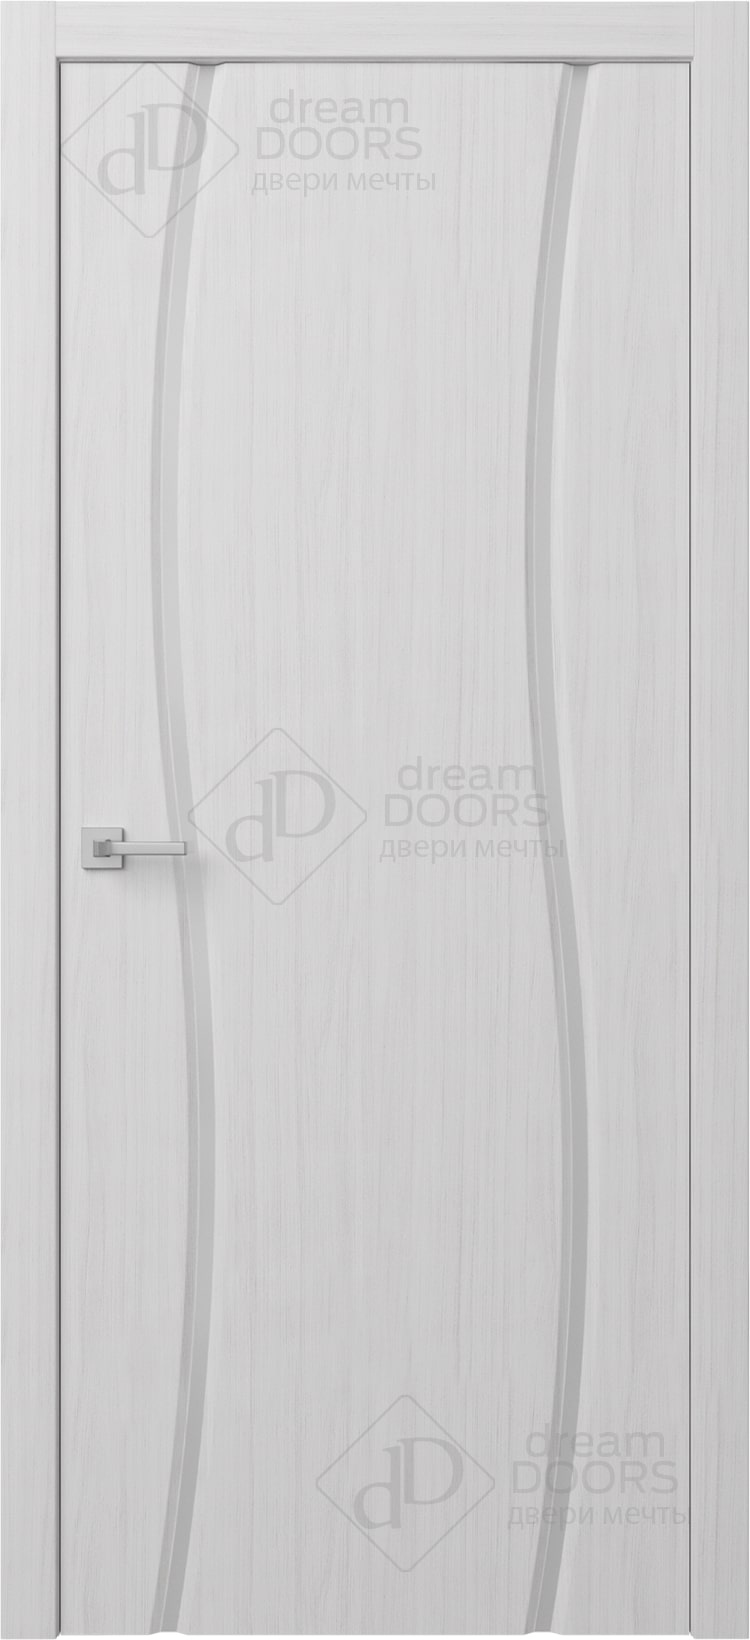 Dream Doors Межкомнатная дверь Сириус 5 ДО, арт. 20087 - фото №1